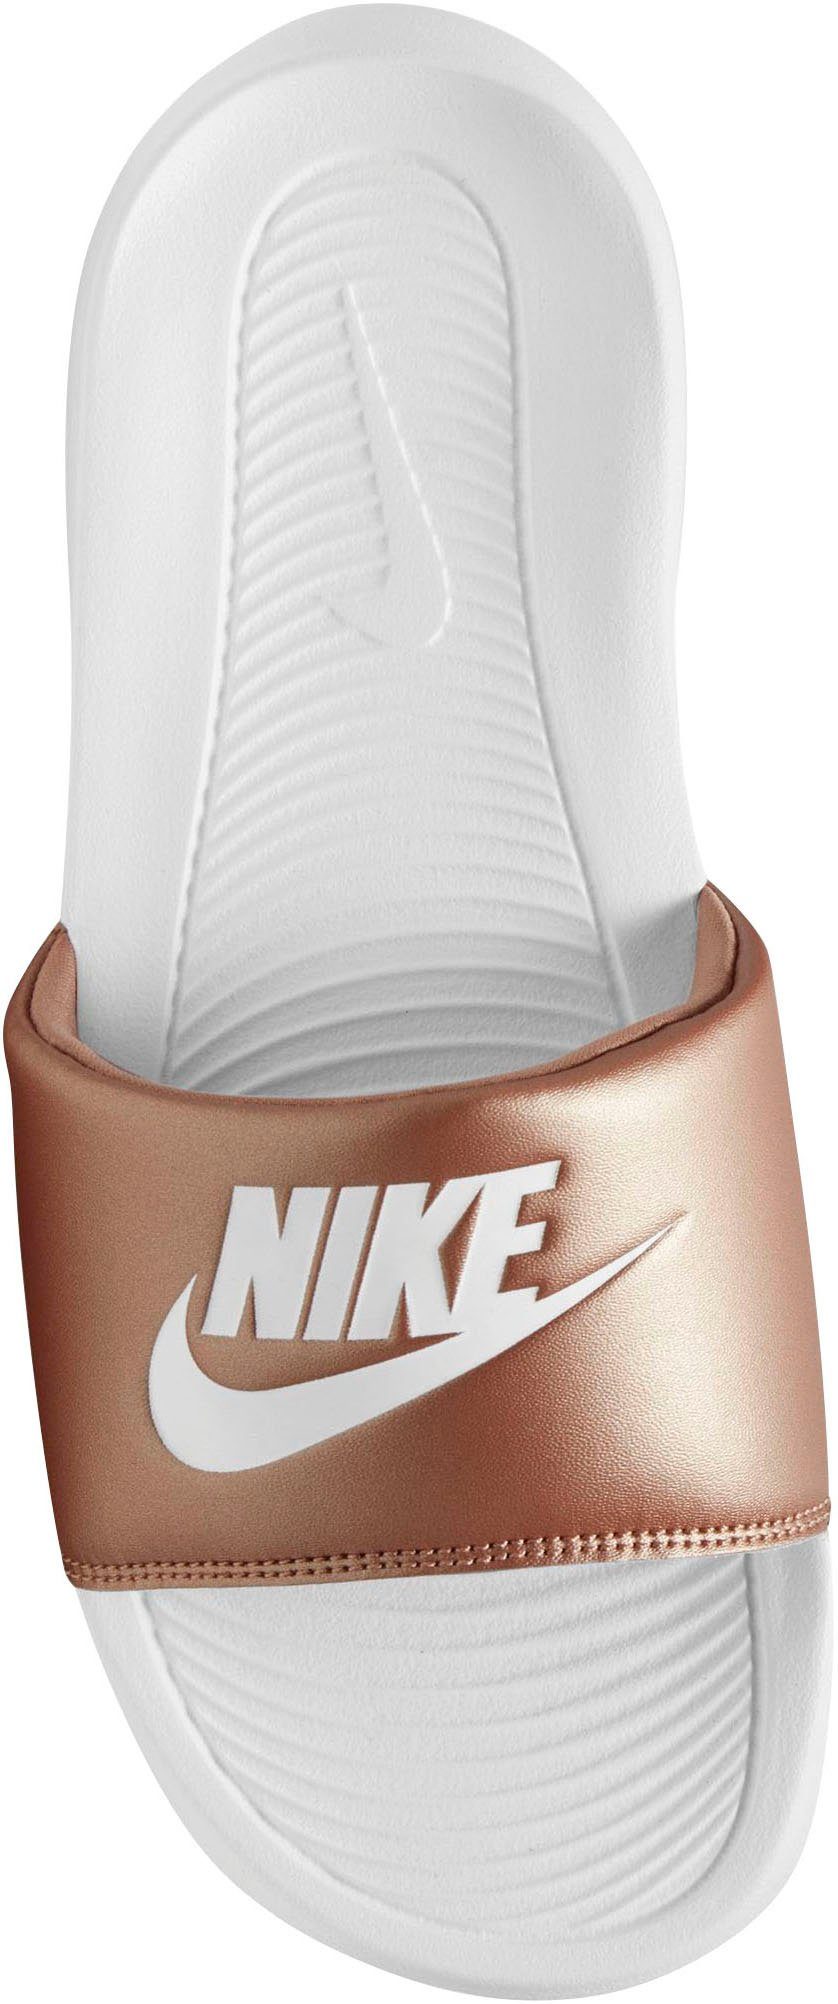 Badesandale One Nike Victori roségoldfarben Sportswear